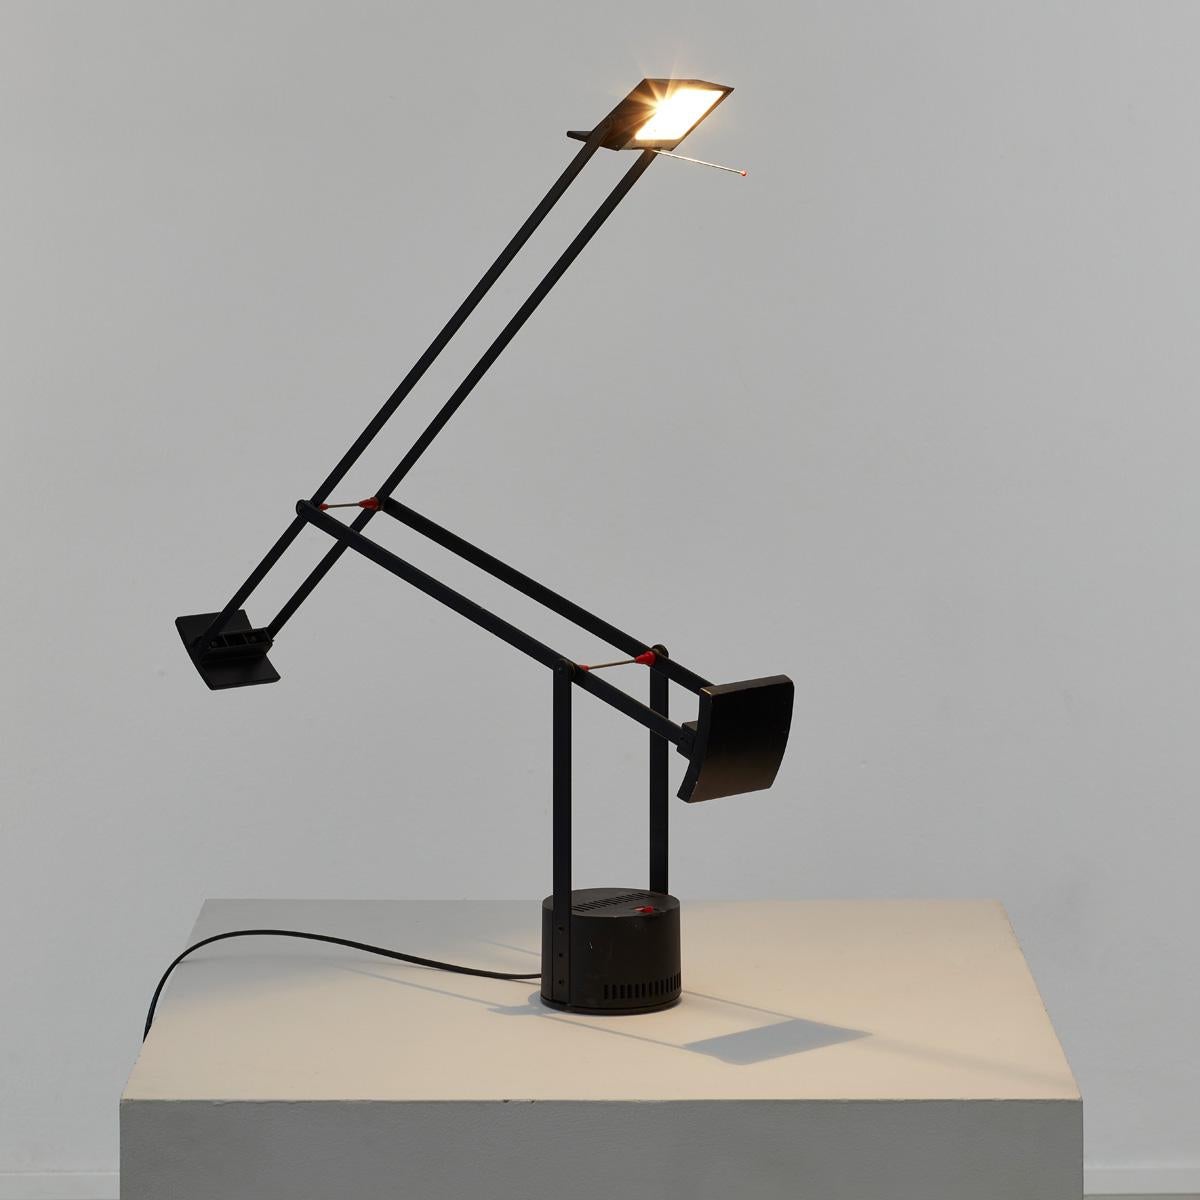 Richard Sapper ‘Tizio’ Table Lamp Artemide, Italy, 1972 For Sale 1